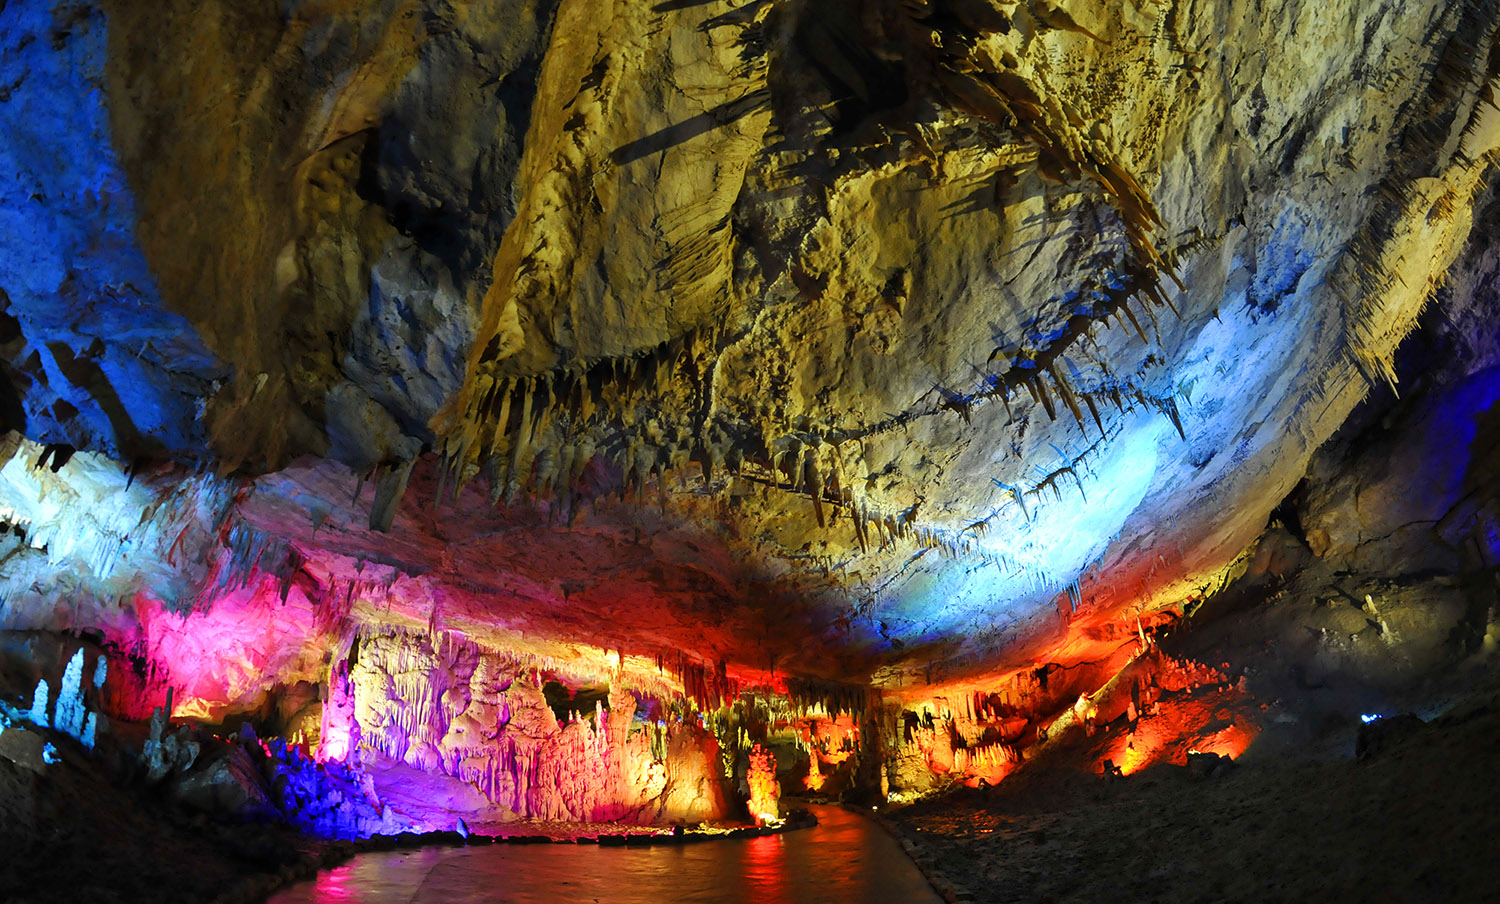 Day 2: Kutaisi - Sataplia - prometheus cave - Borjomi